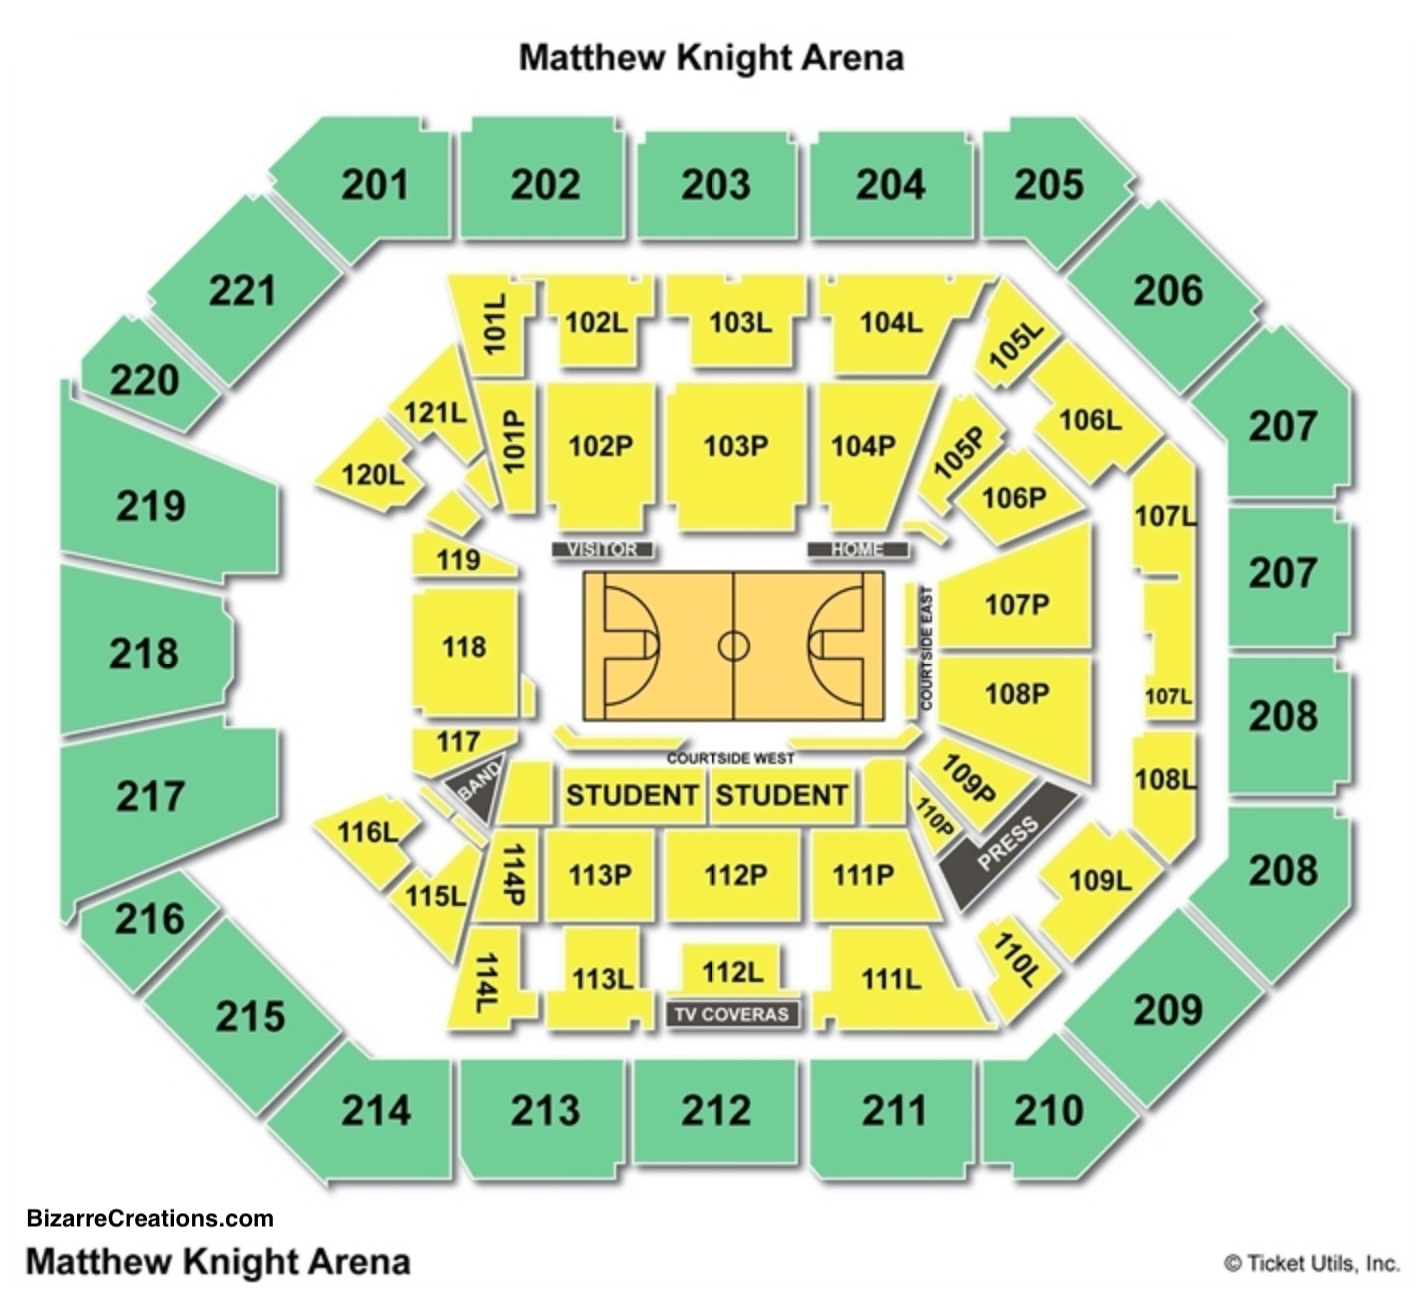 Matthew Knight Arena Seating Charts Views Games Answers Cheats